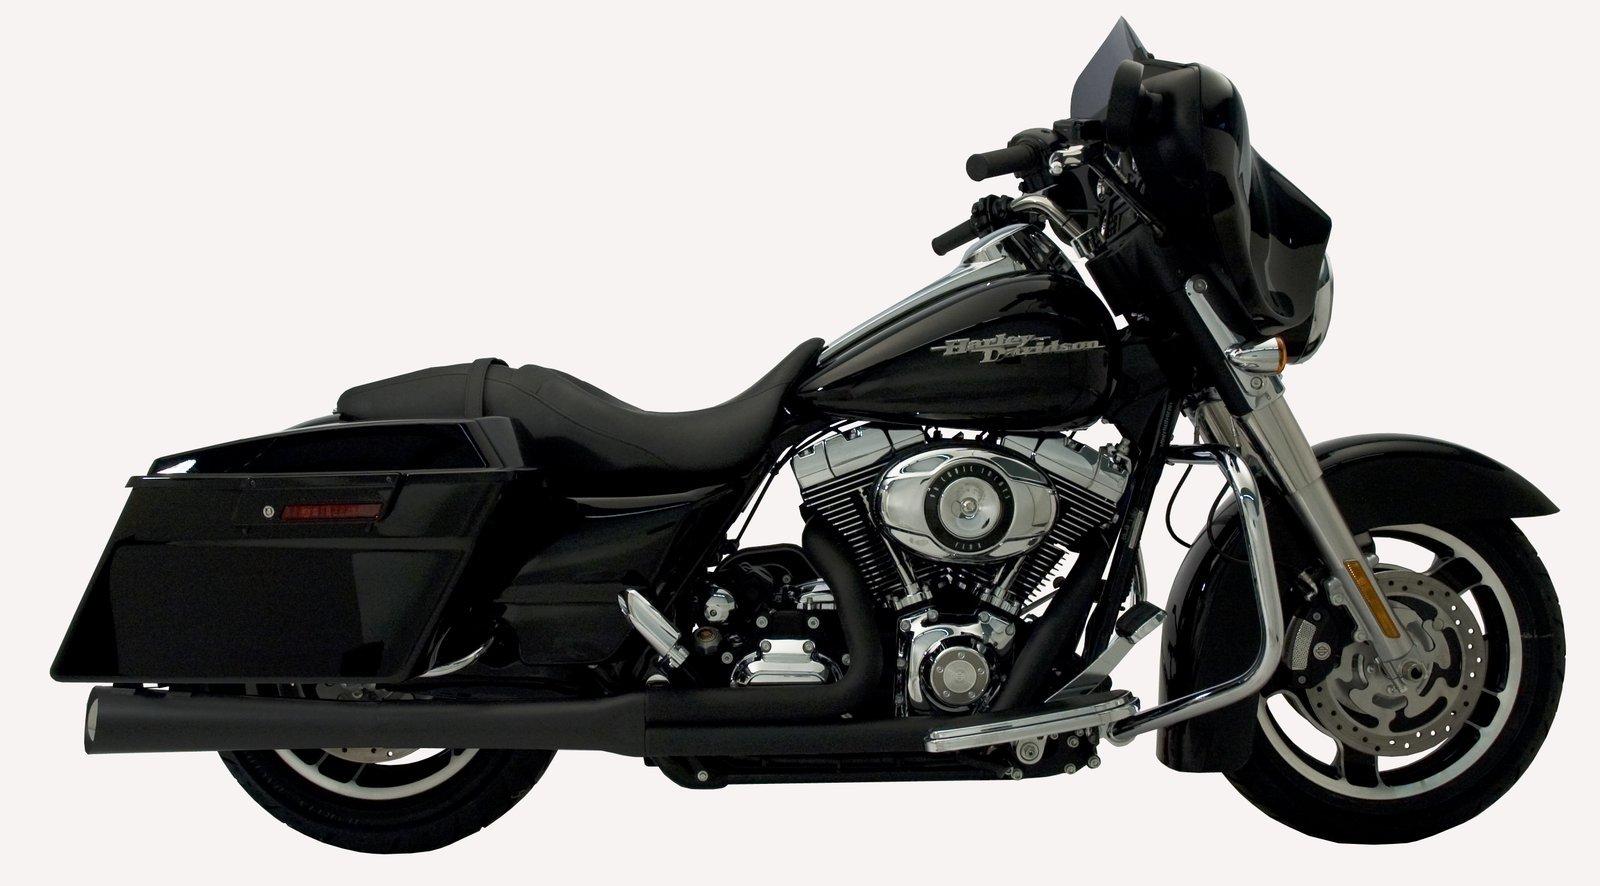 2009 Harley Davidson Touring Models Supermeg 2-1 Black Ceramic Exhaust - Click Image to Close